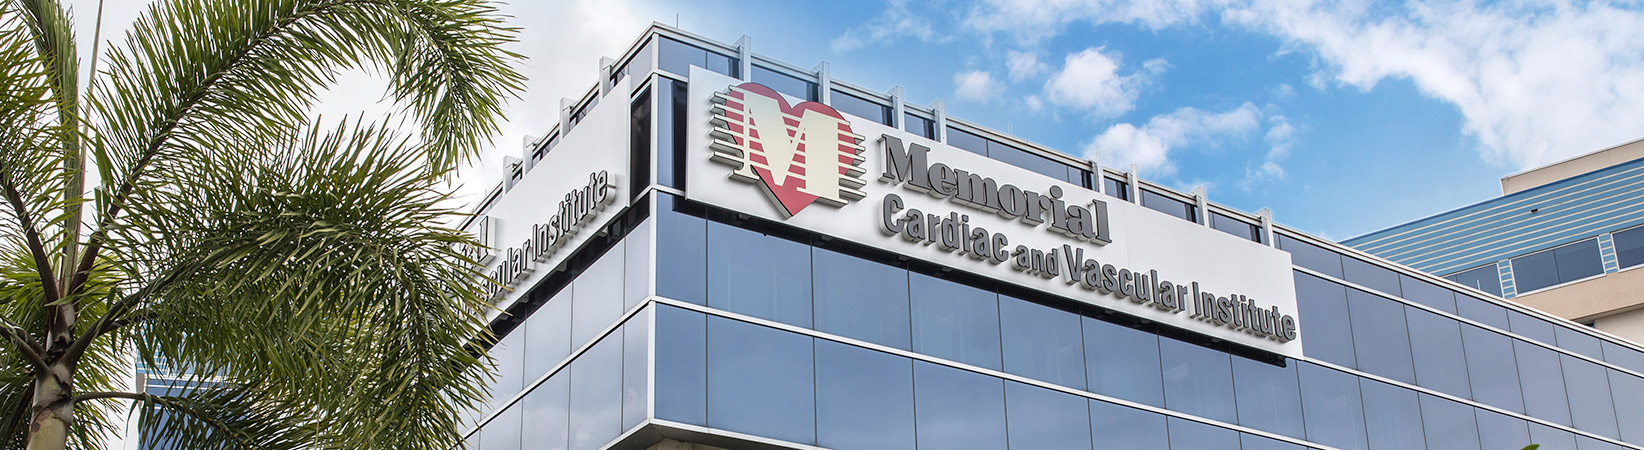 MHS - Cardiac and Vascular Institute